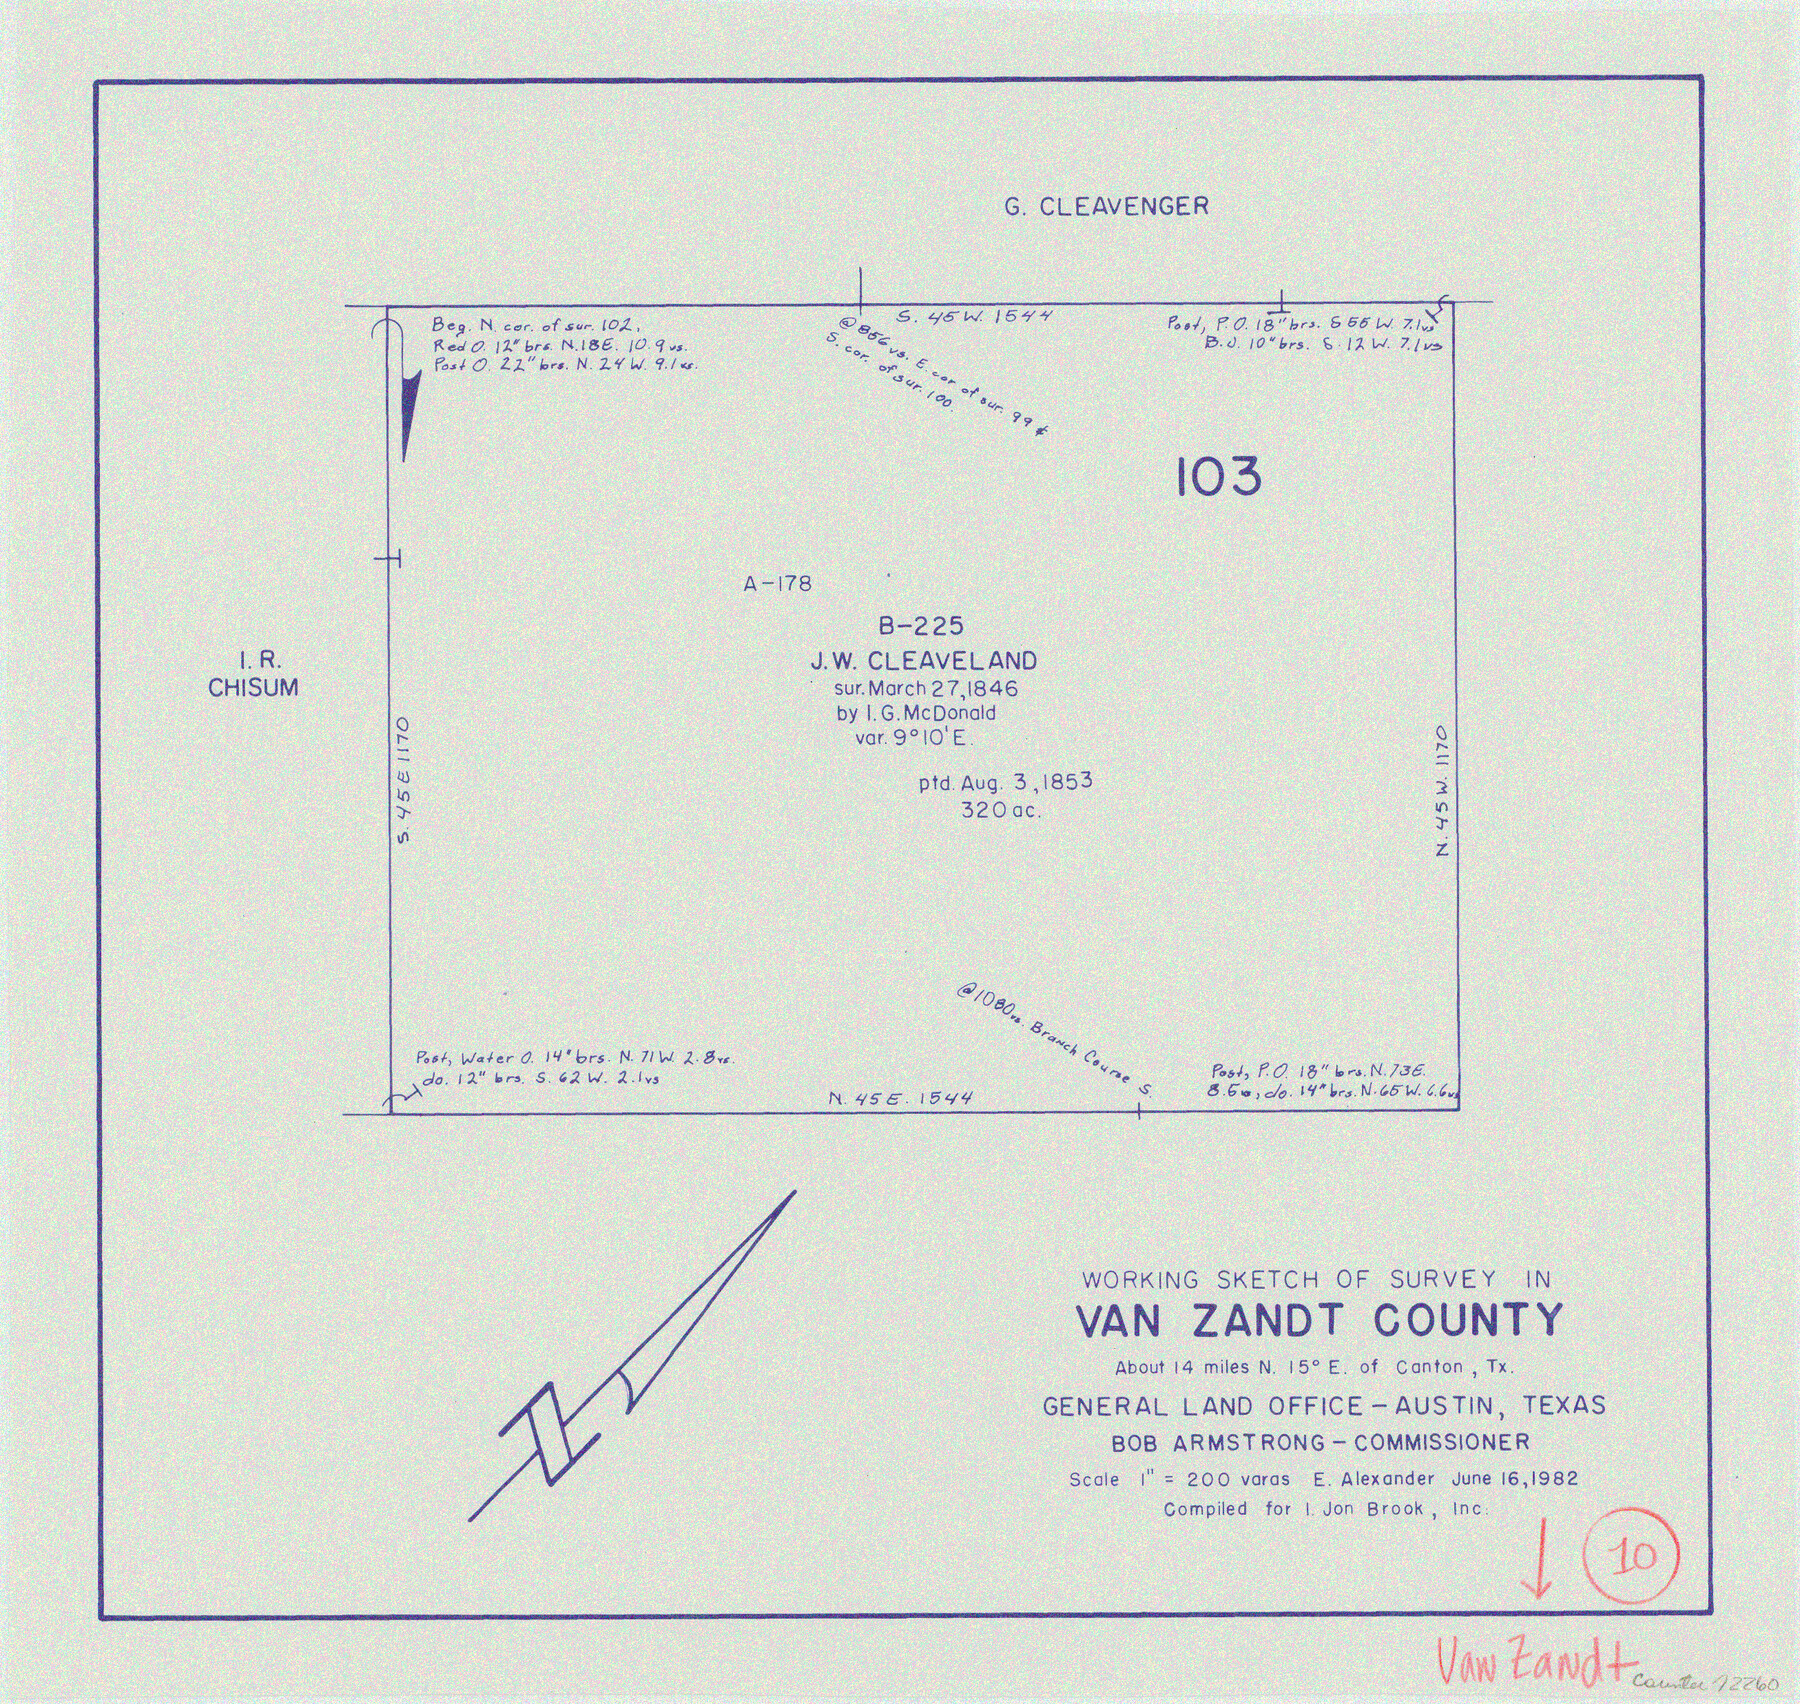 72260, Van Zandt County Working Sketch 10, General Map Collection